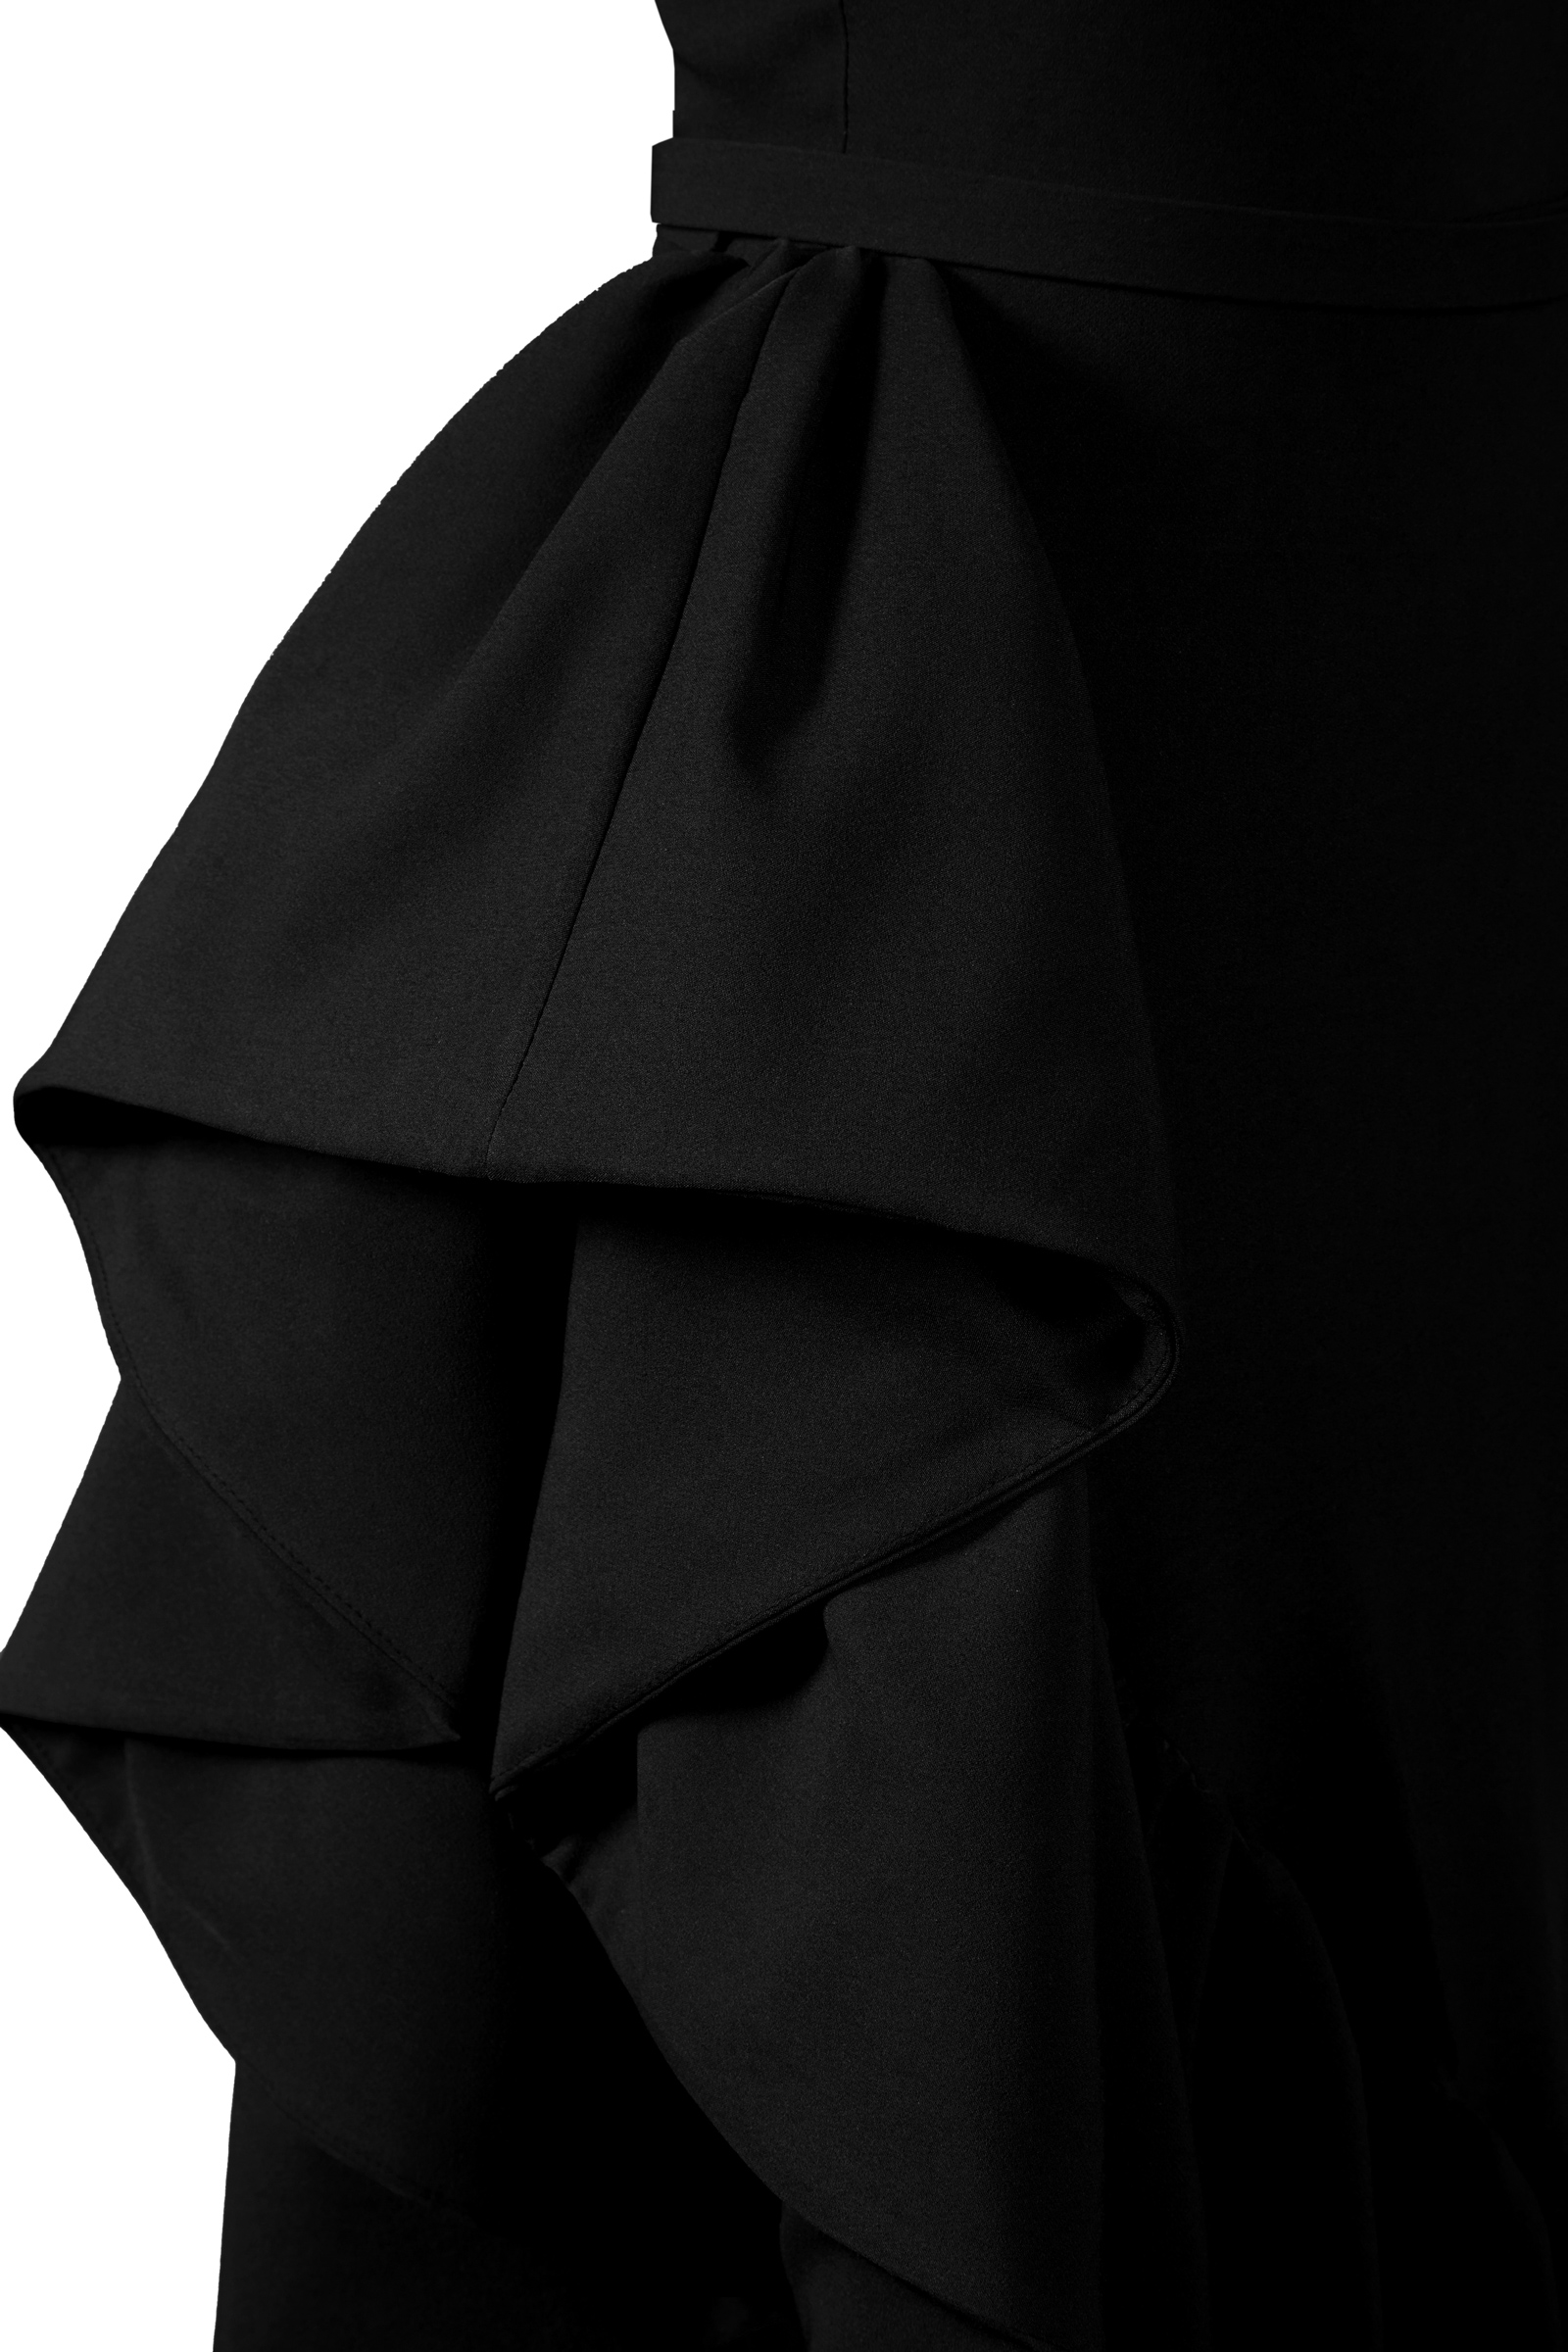 Black crepe one arm maxi dress